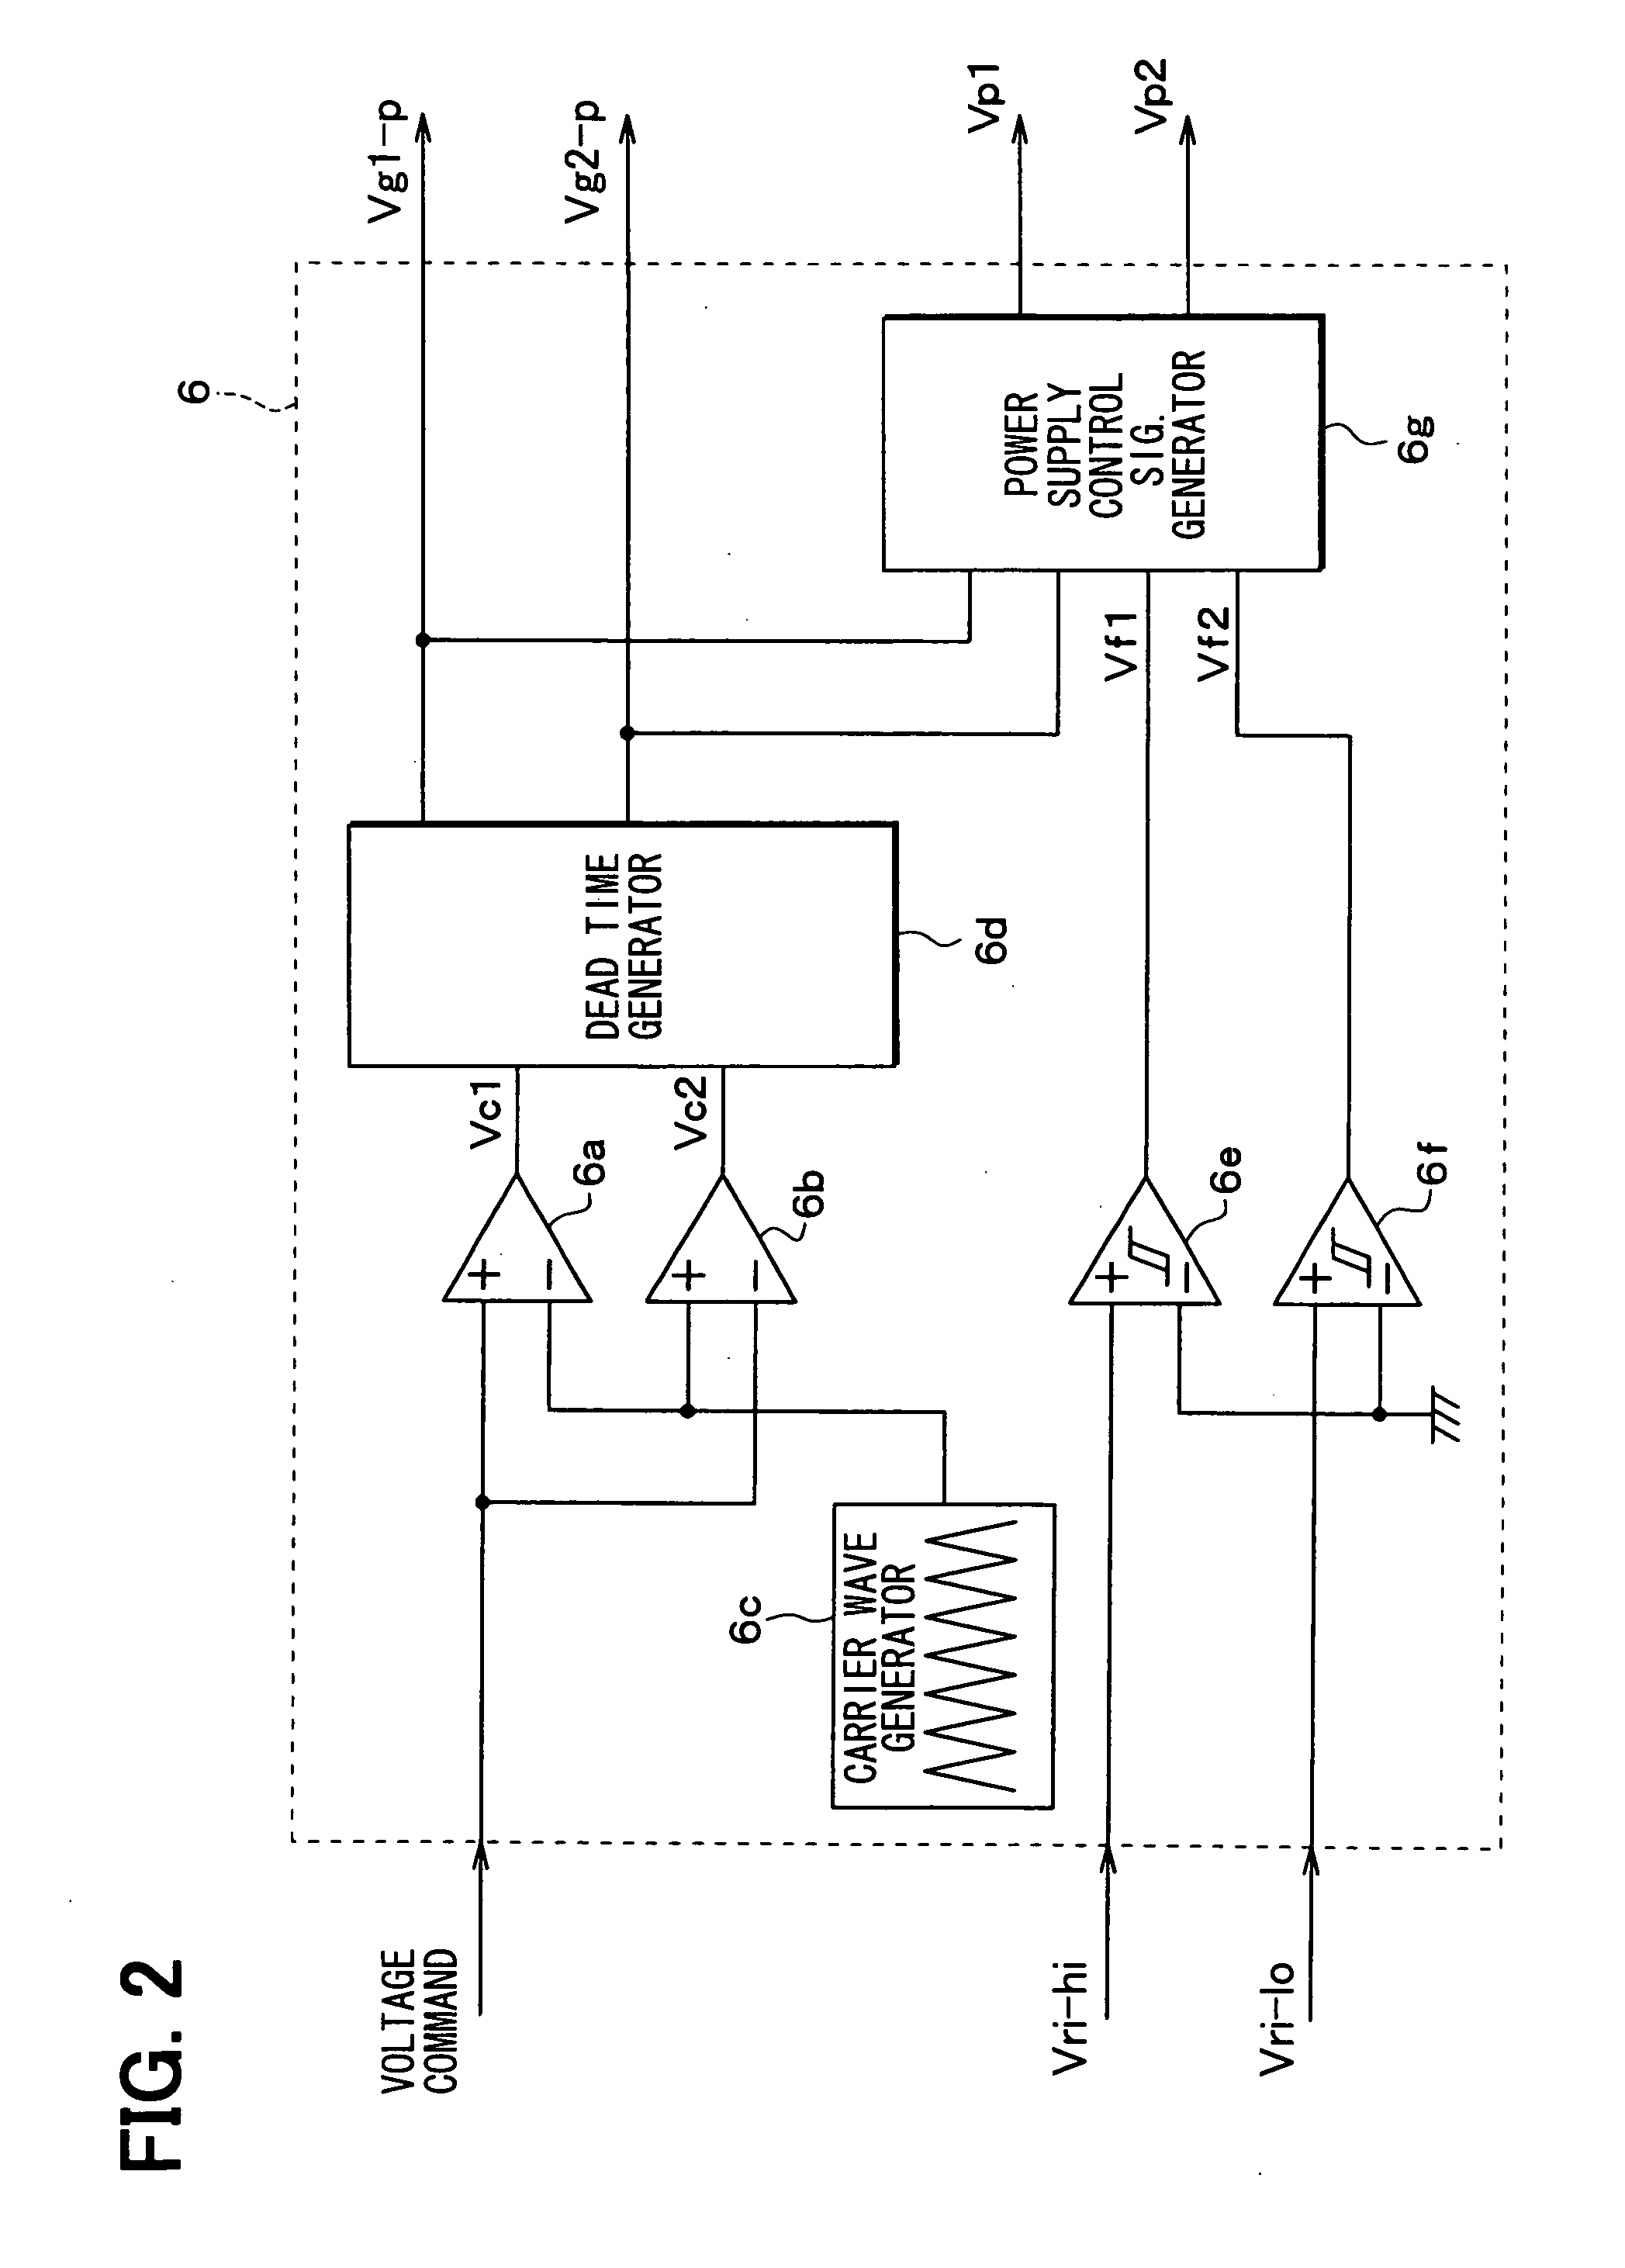 Method for controlling vertical type MOSFET in bridge circuit